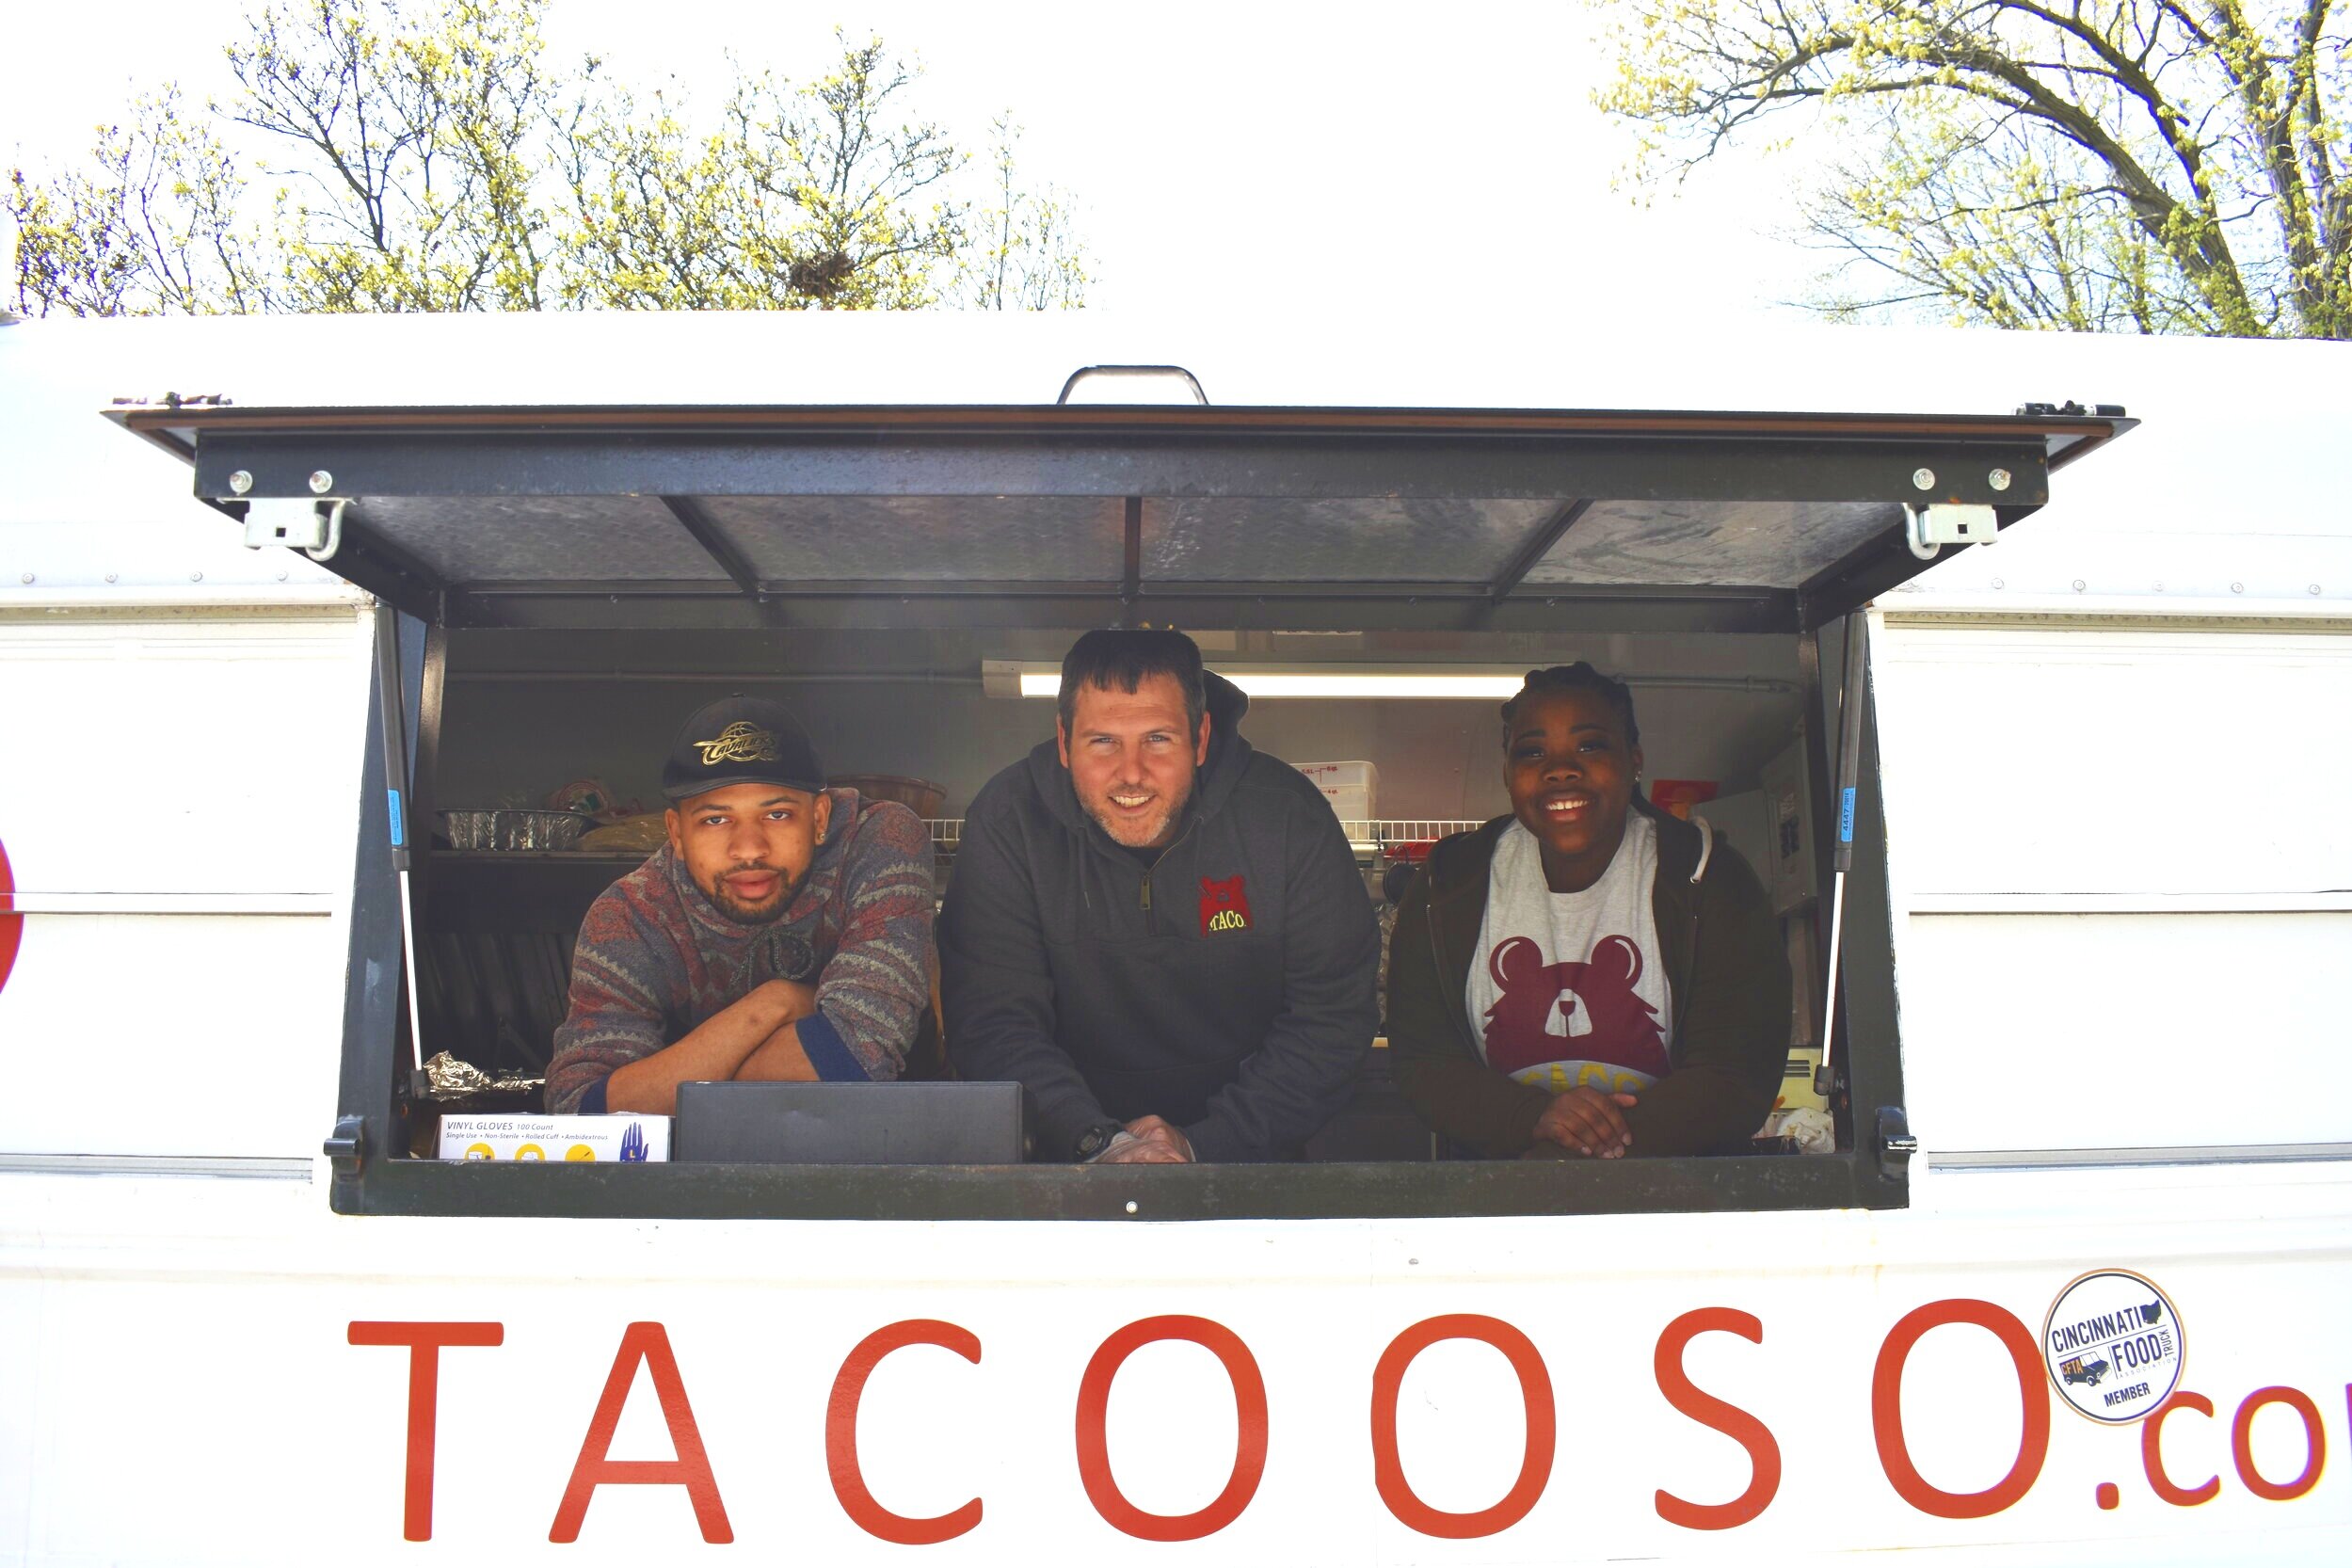 Taco+Oso+Crew+w+truck.jpg